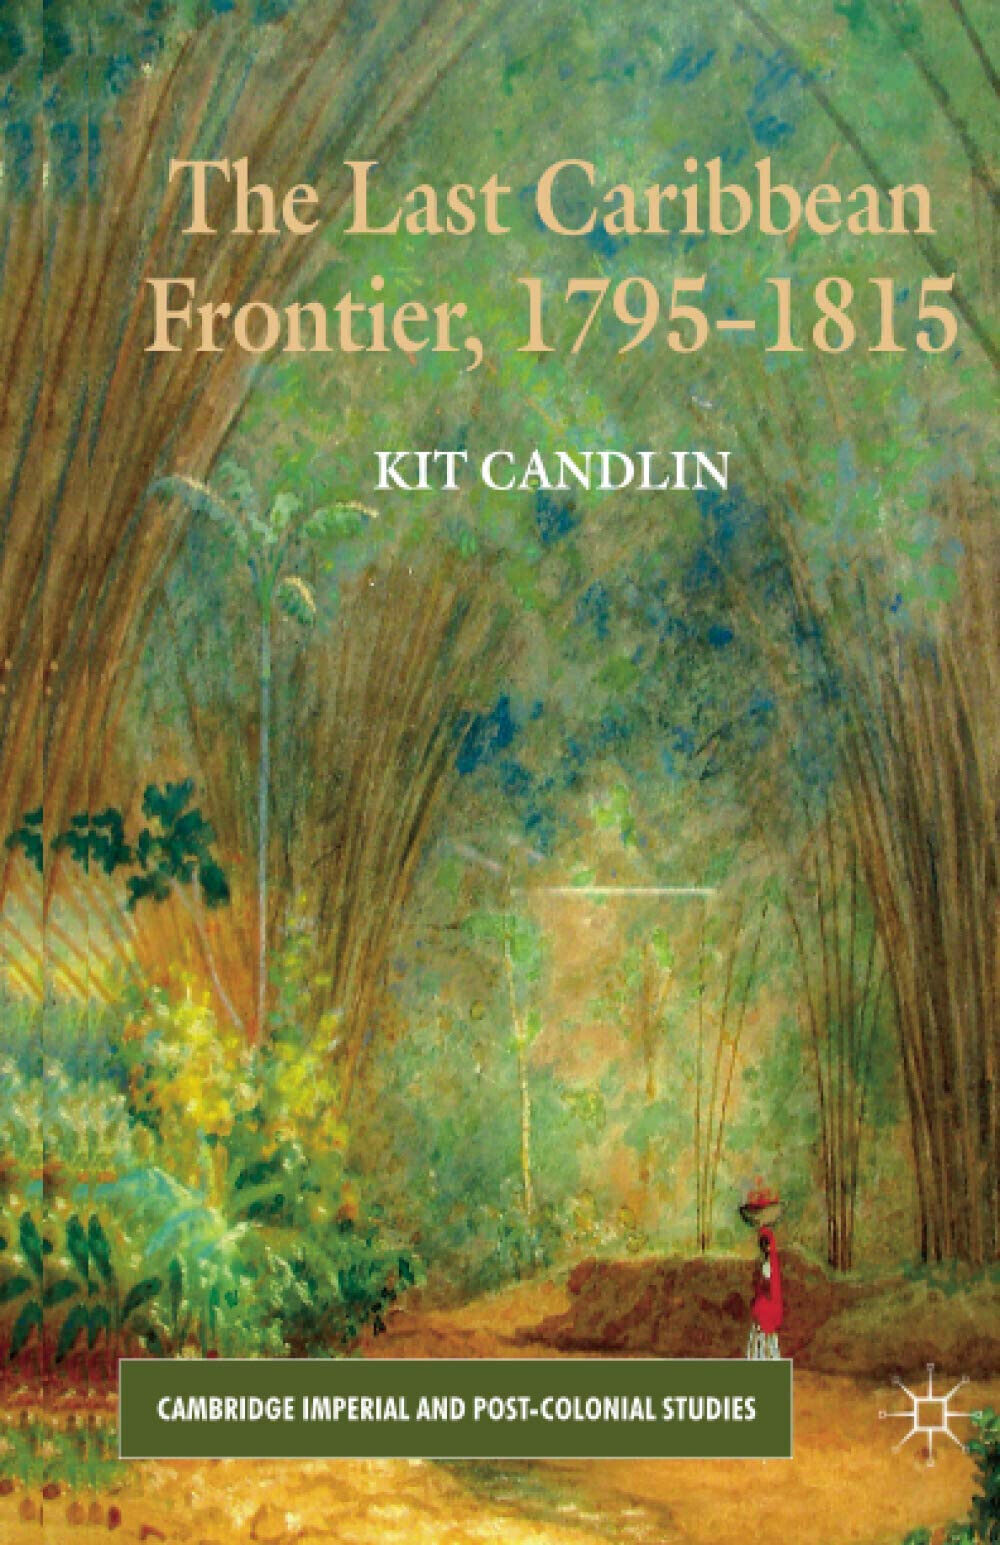 The Last Caribbean Frontier, 1795-1815 - Kit Candlin - Palgrave, 2012